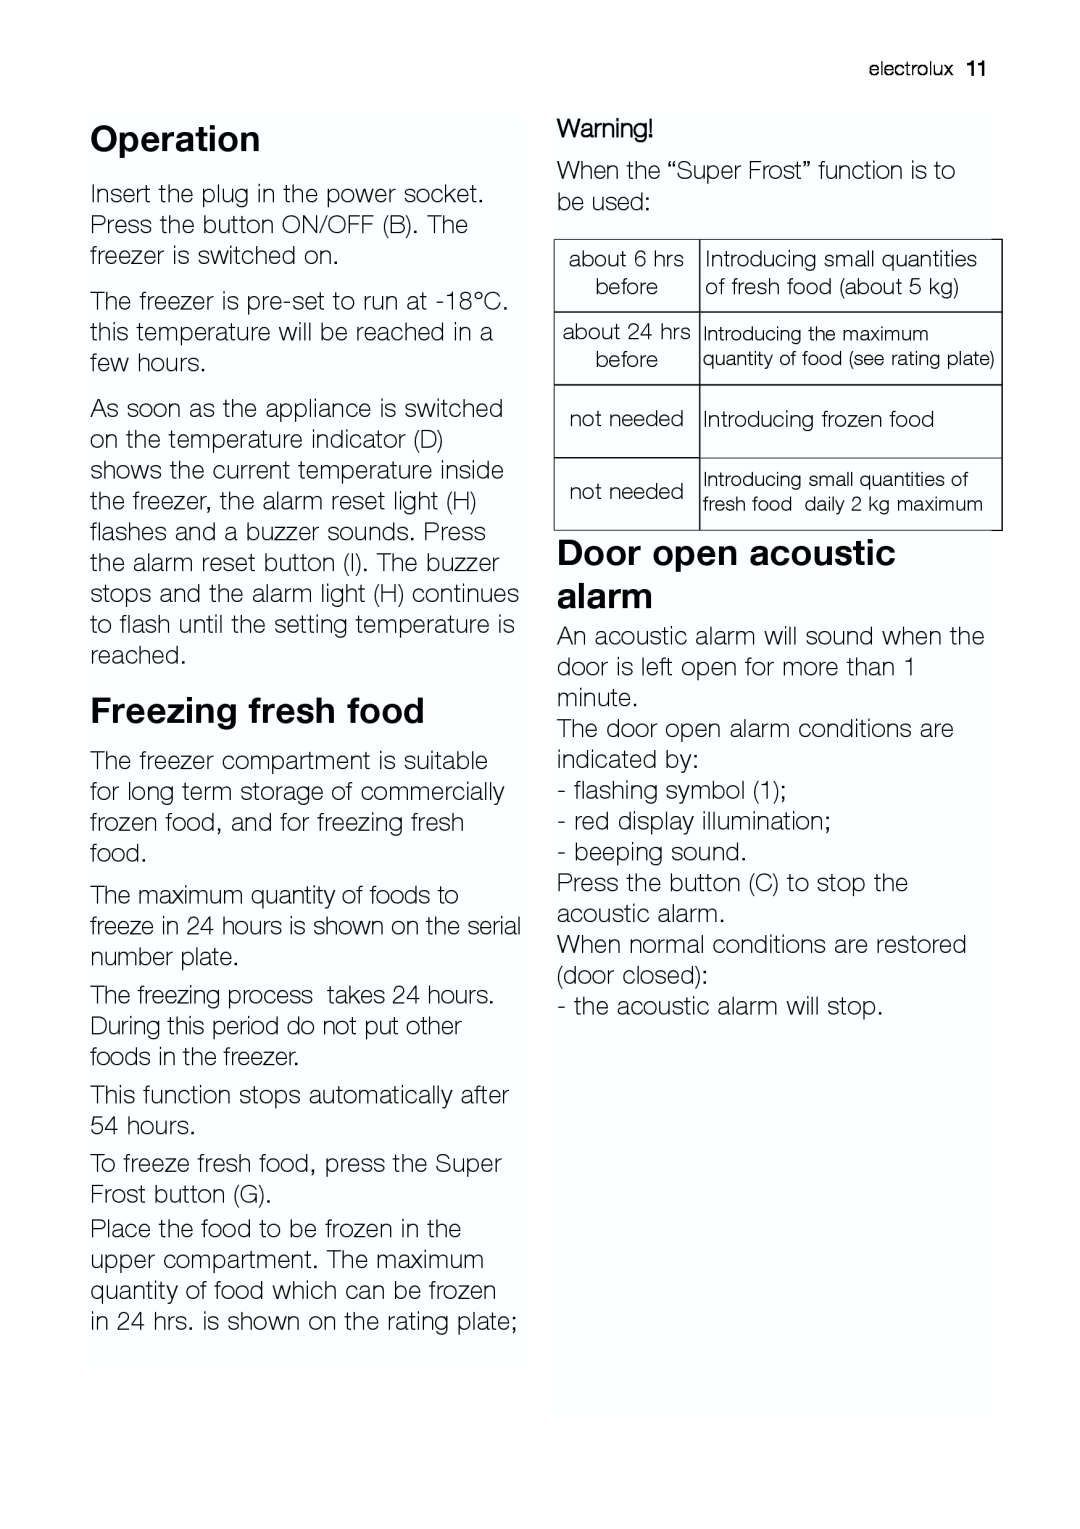 Electrolux EUG 23800 manual Operation, Freezing fresh food, Door open acoustic alarm 